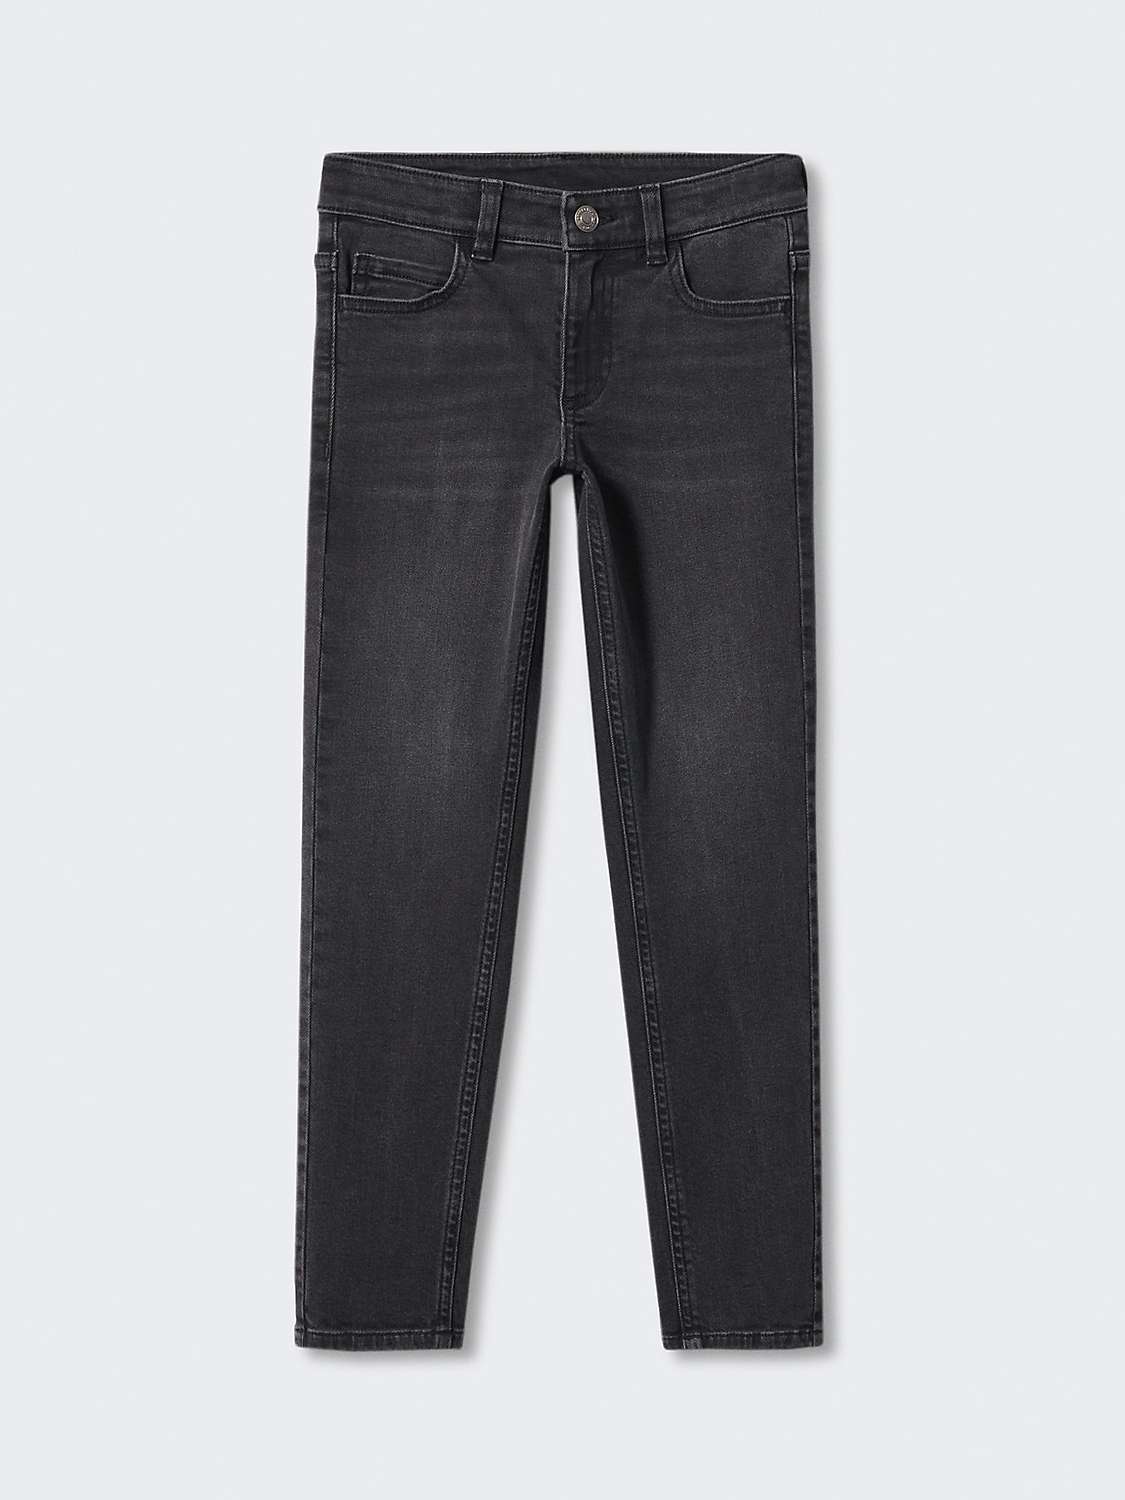 Mango Kids' Slim Fit Cropped Jeans, Open Grey at John Lewis & Partners